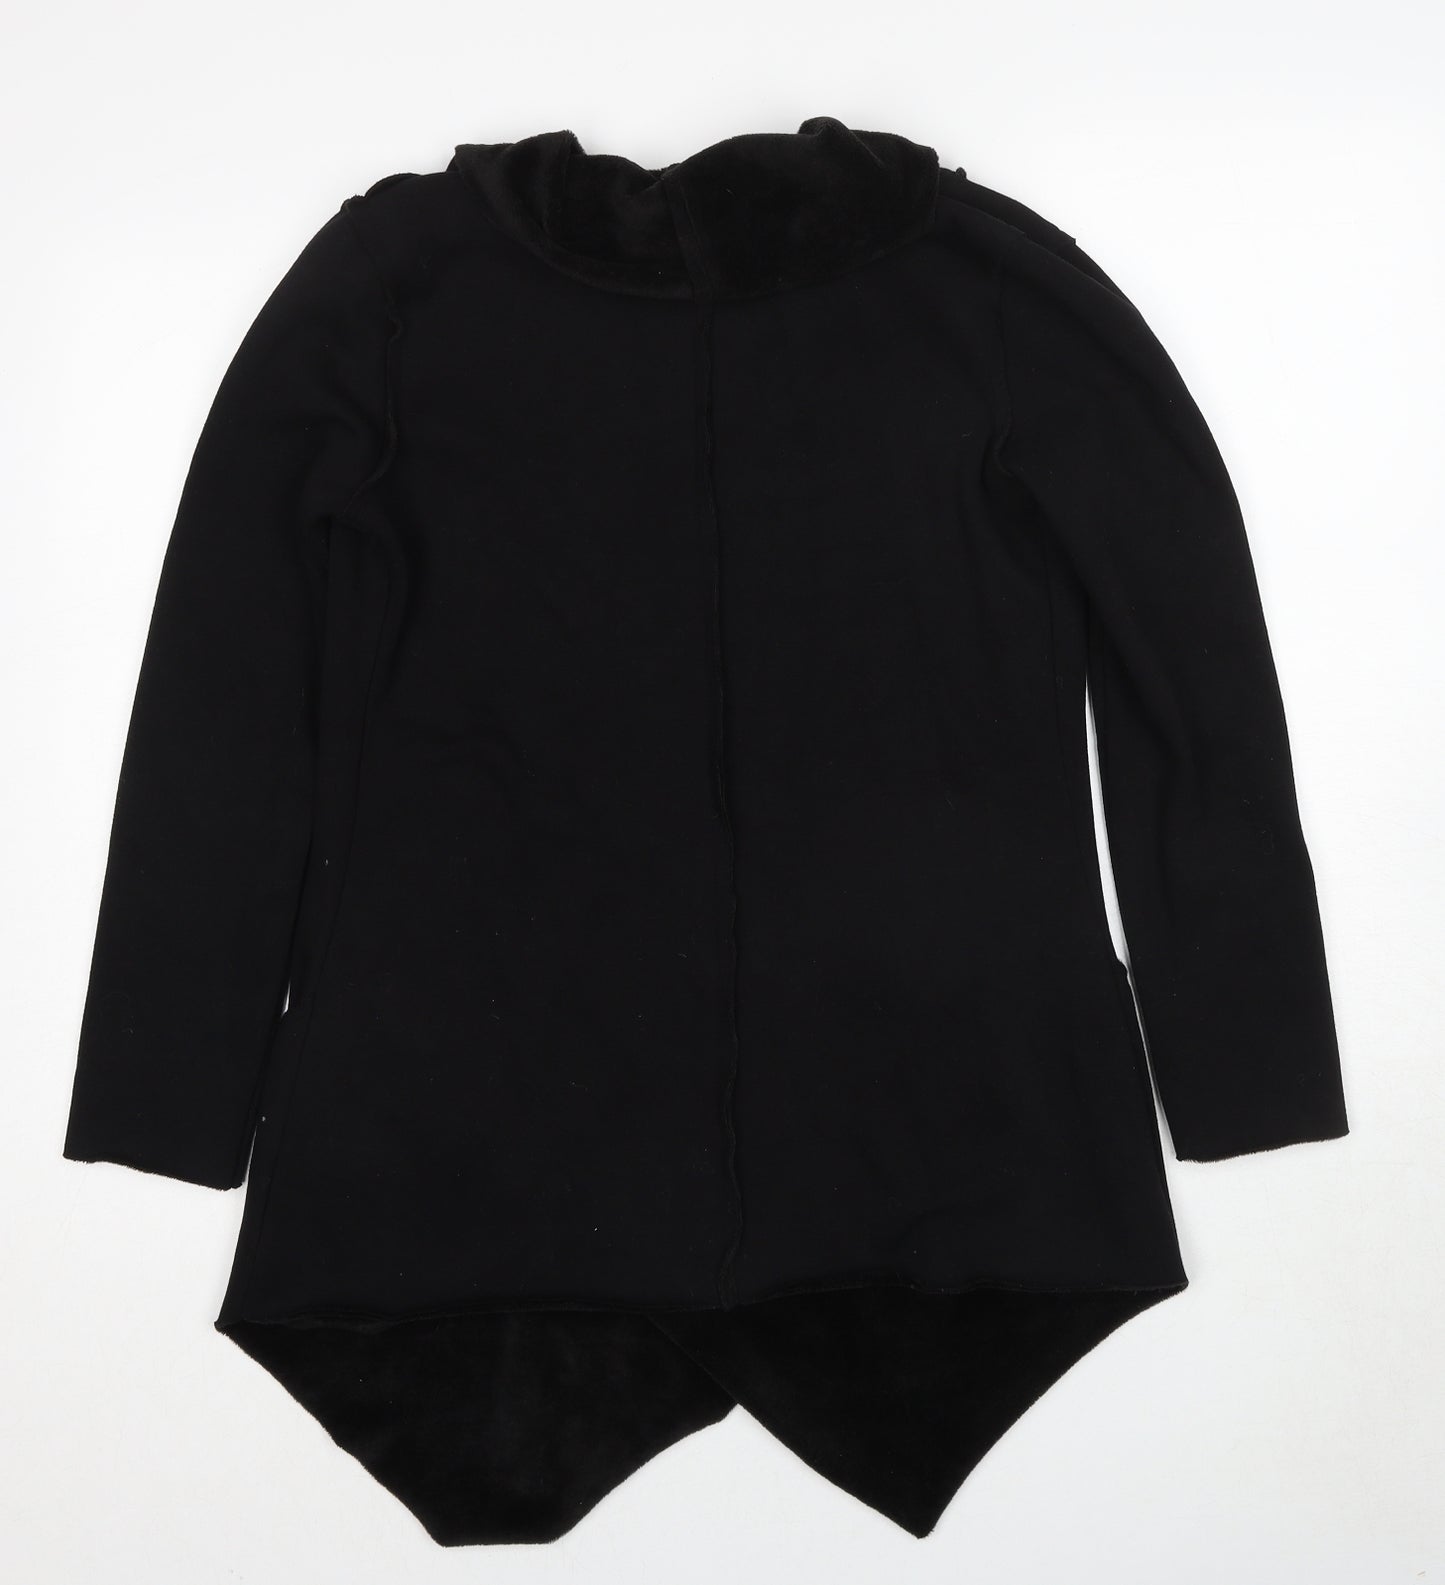 C.Oliver Womens Black Jacket Size M